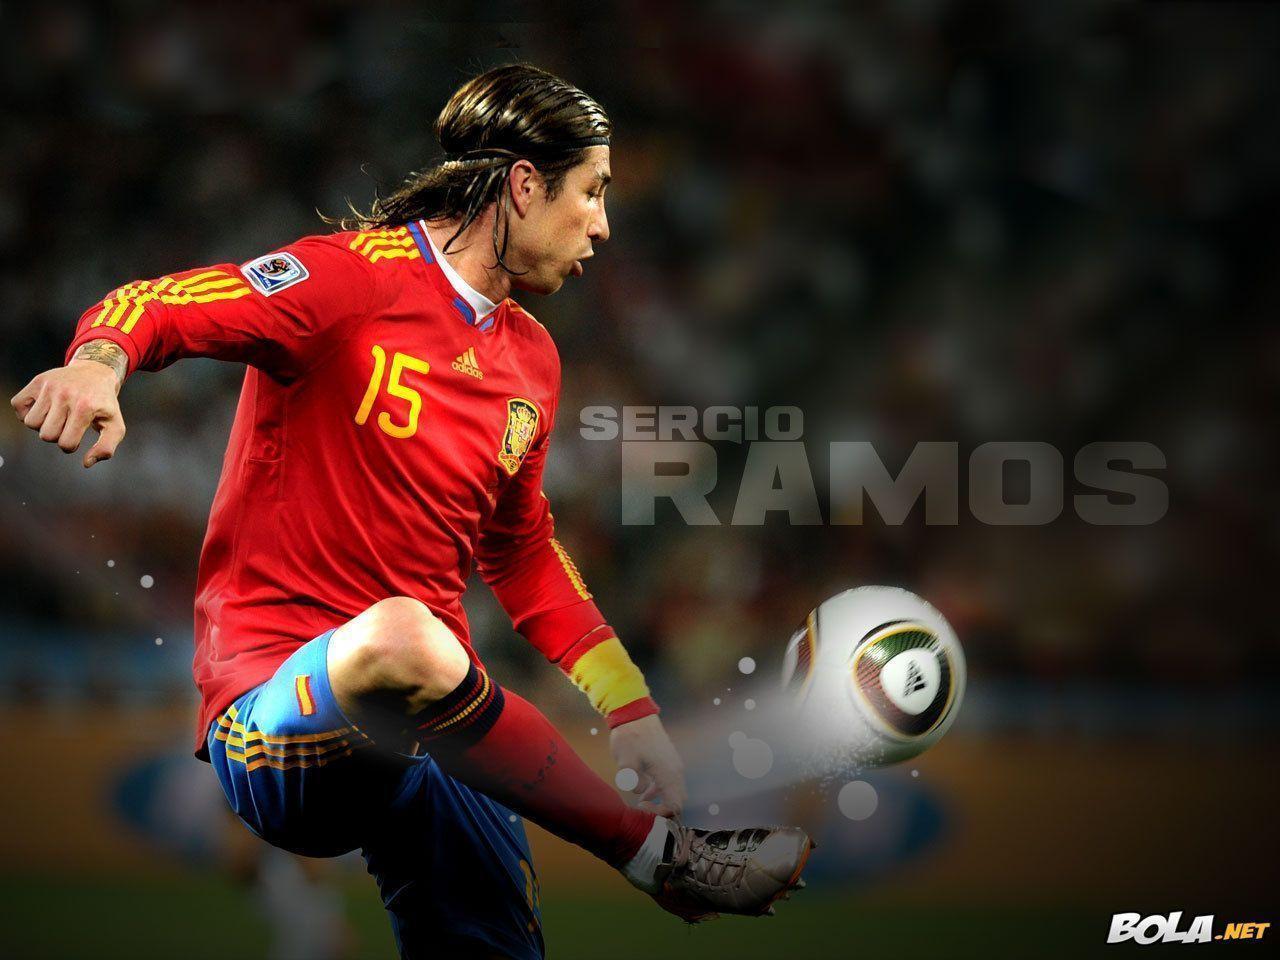 Sergio Ramos, Spain player image for desktop background